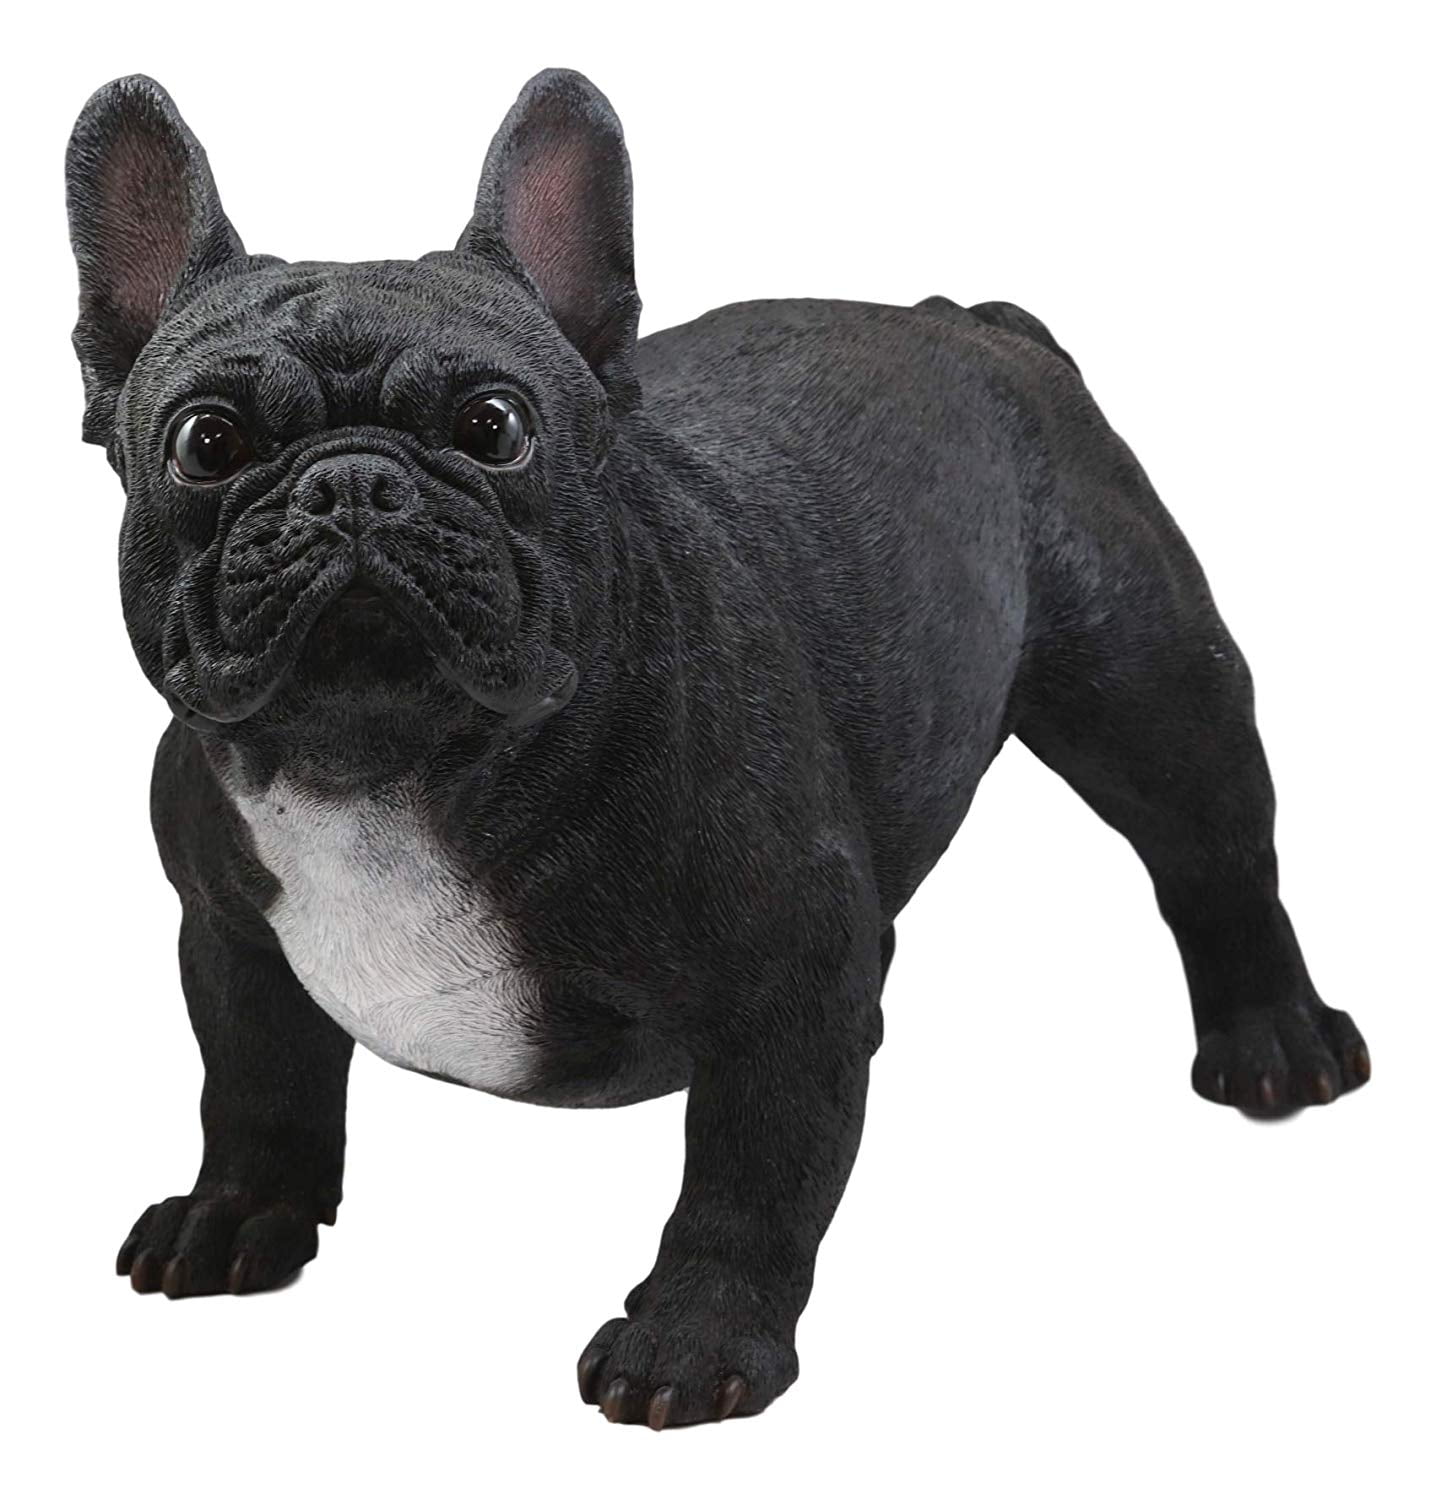 Handcraft Resin Black Lying French Bulldog Figurine Animal Statue Ornament 